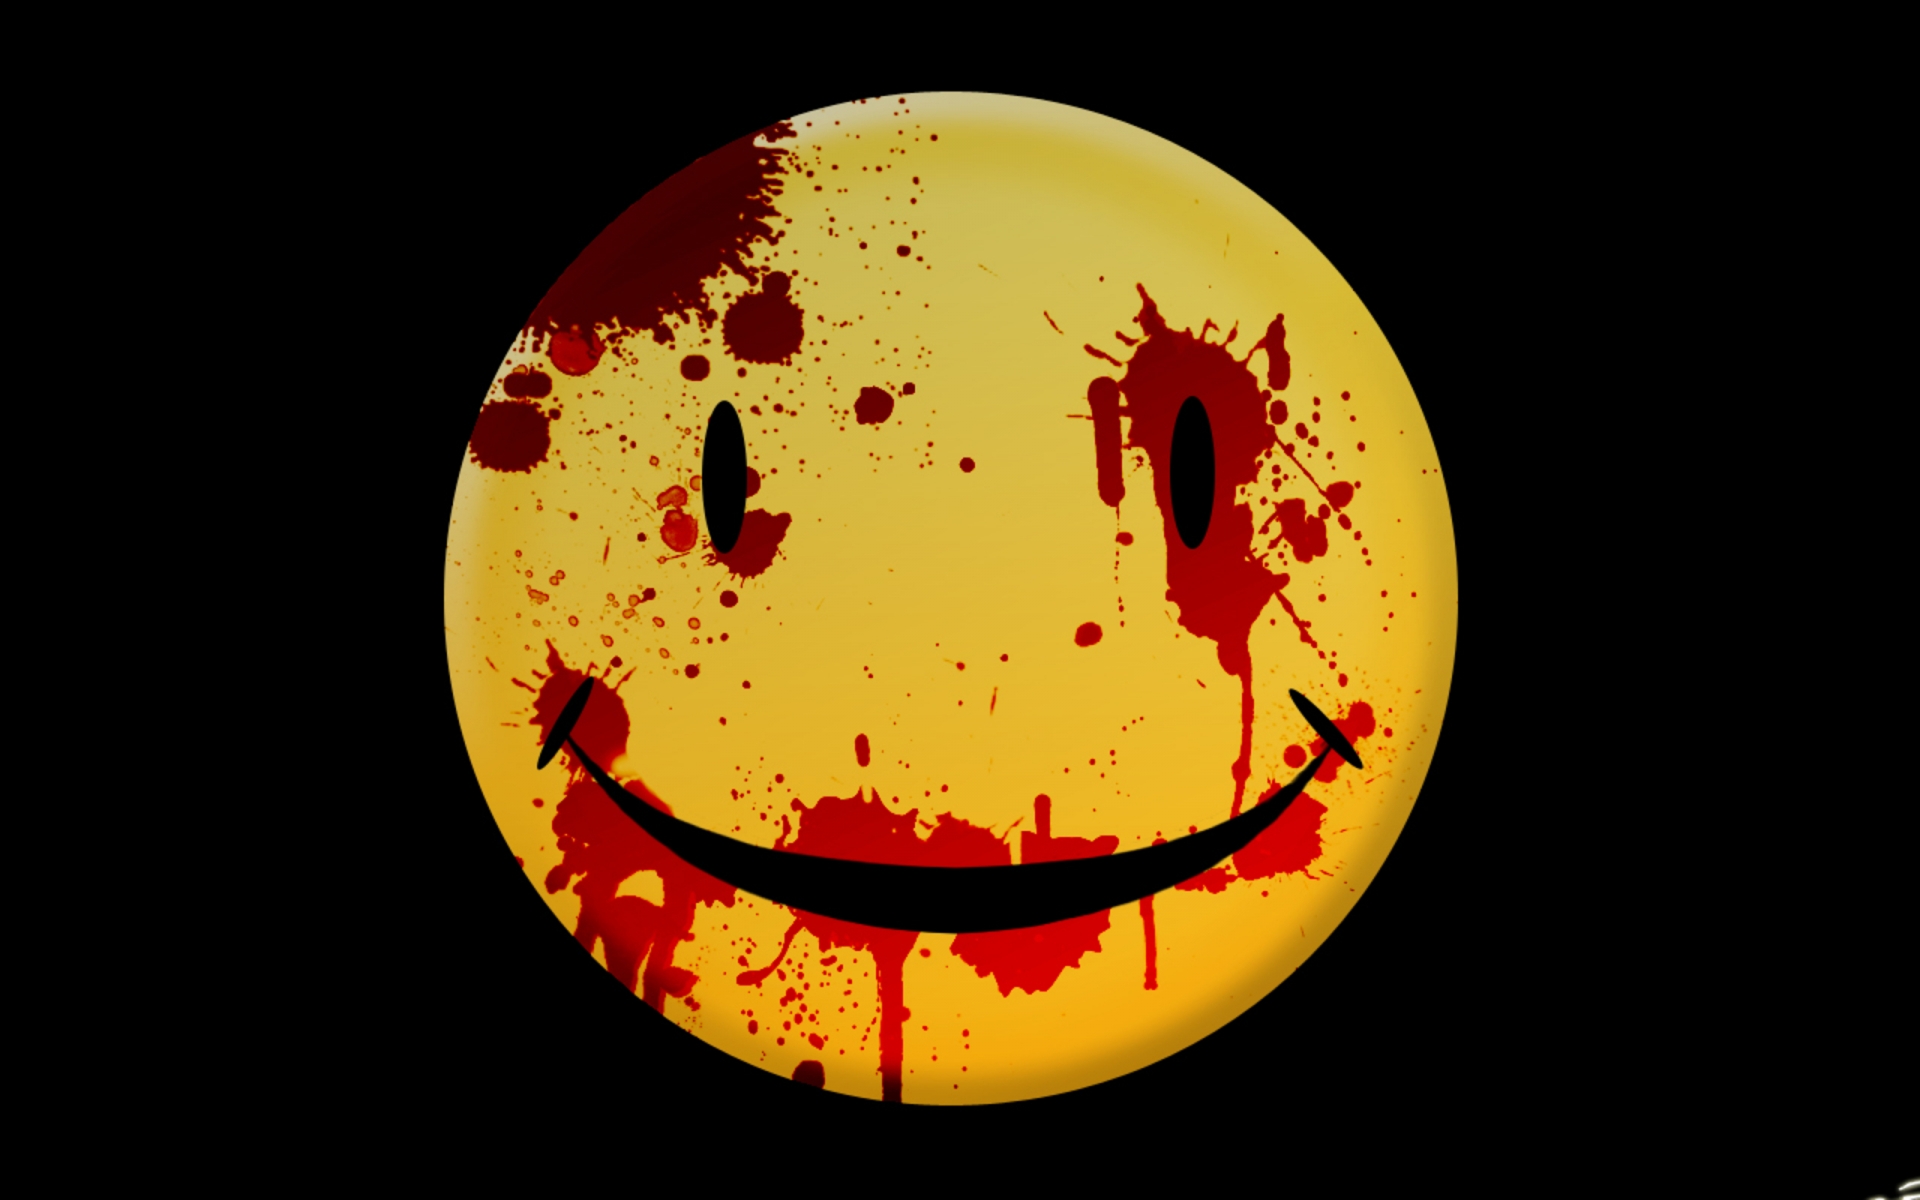 smiley face dark horror mood blood wallpaper background